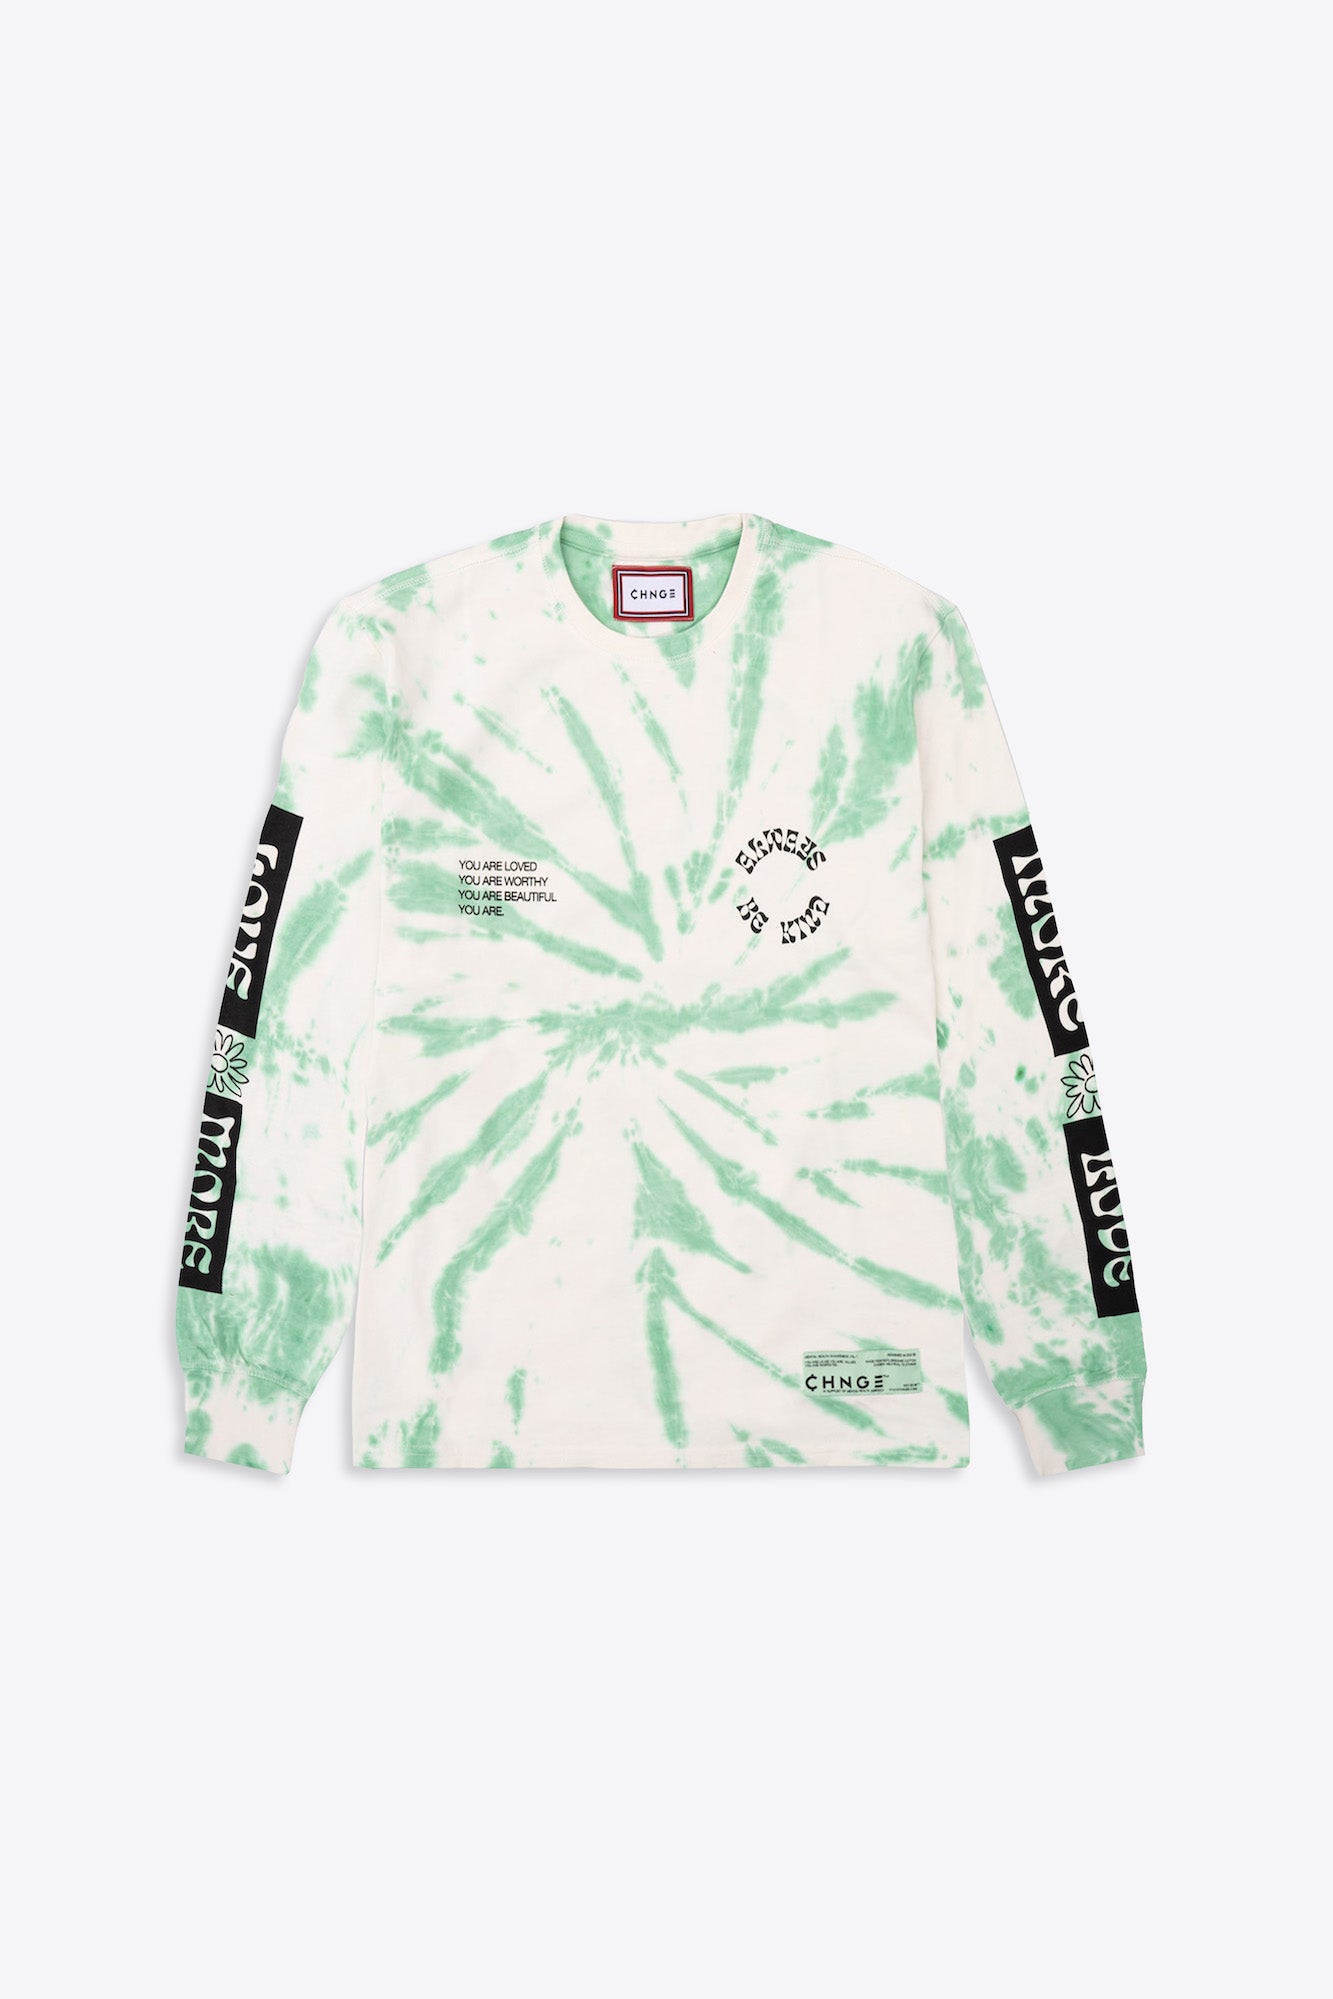 Love More Cuffed L/S TD) T-Shirt $47 Spiral (Green